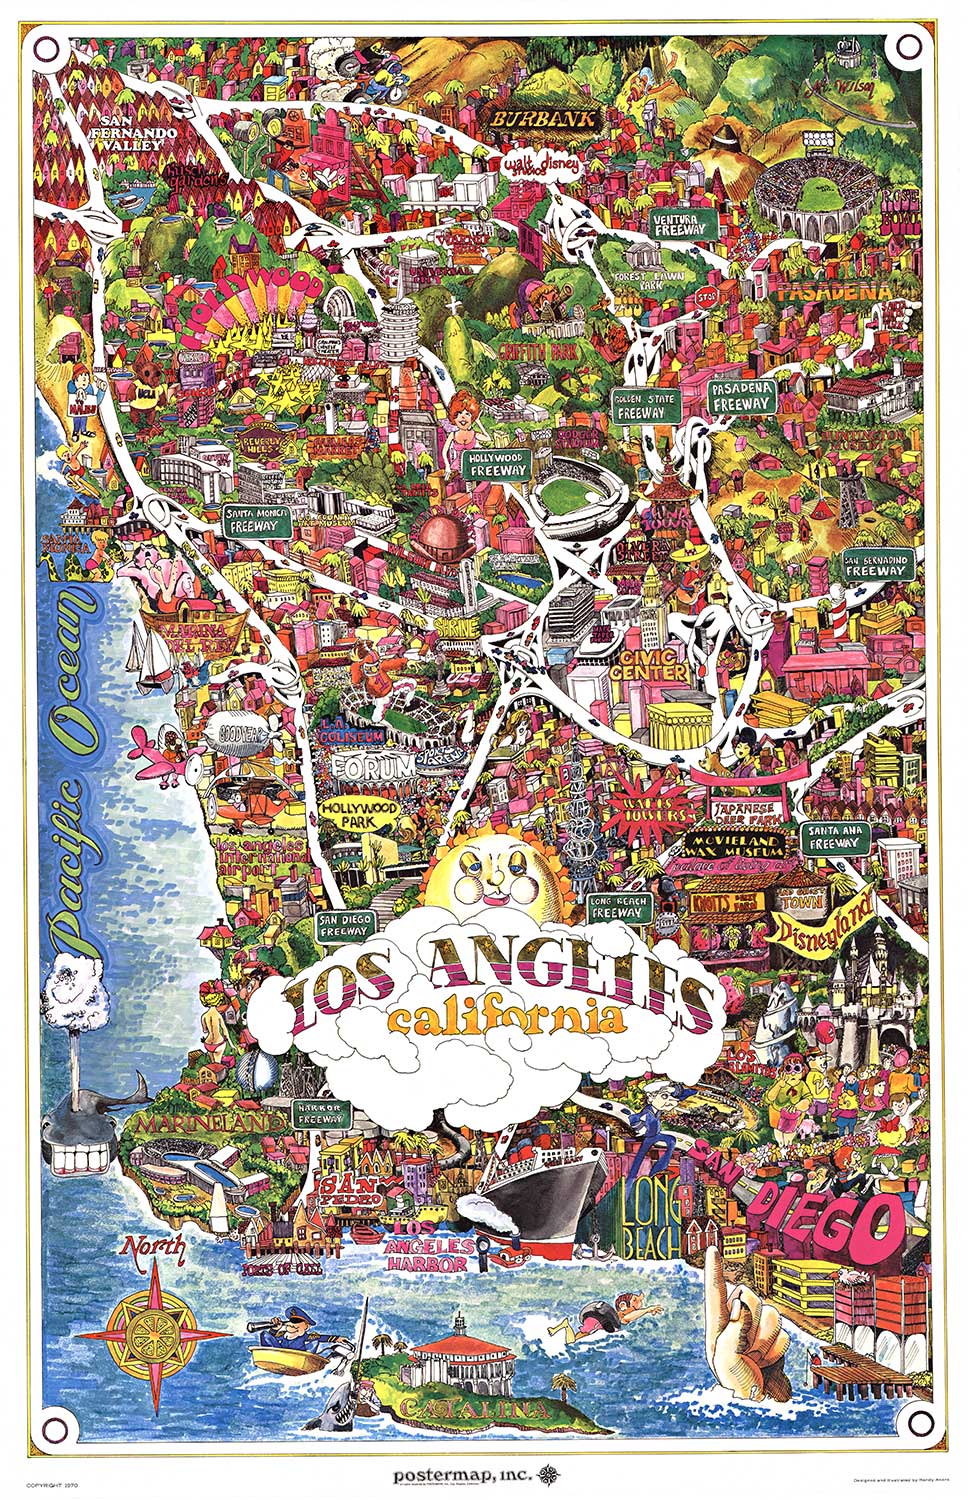 Los Angeles California fun map